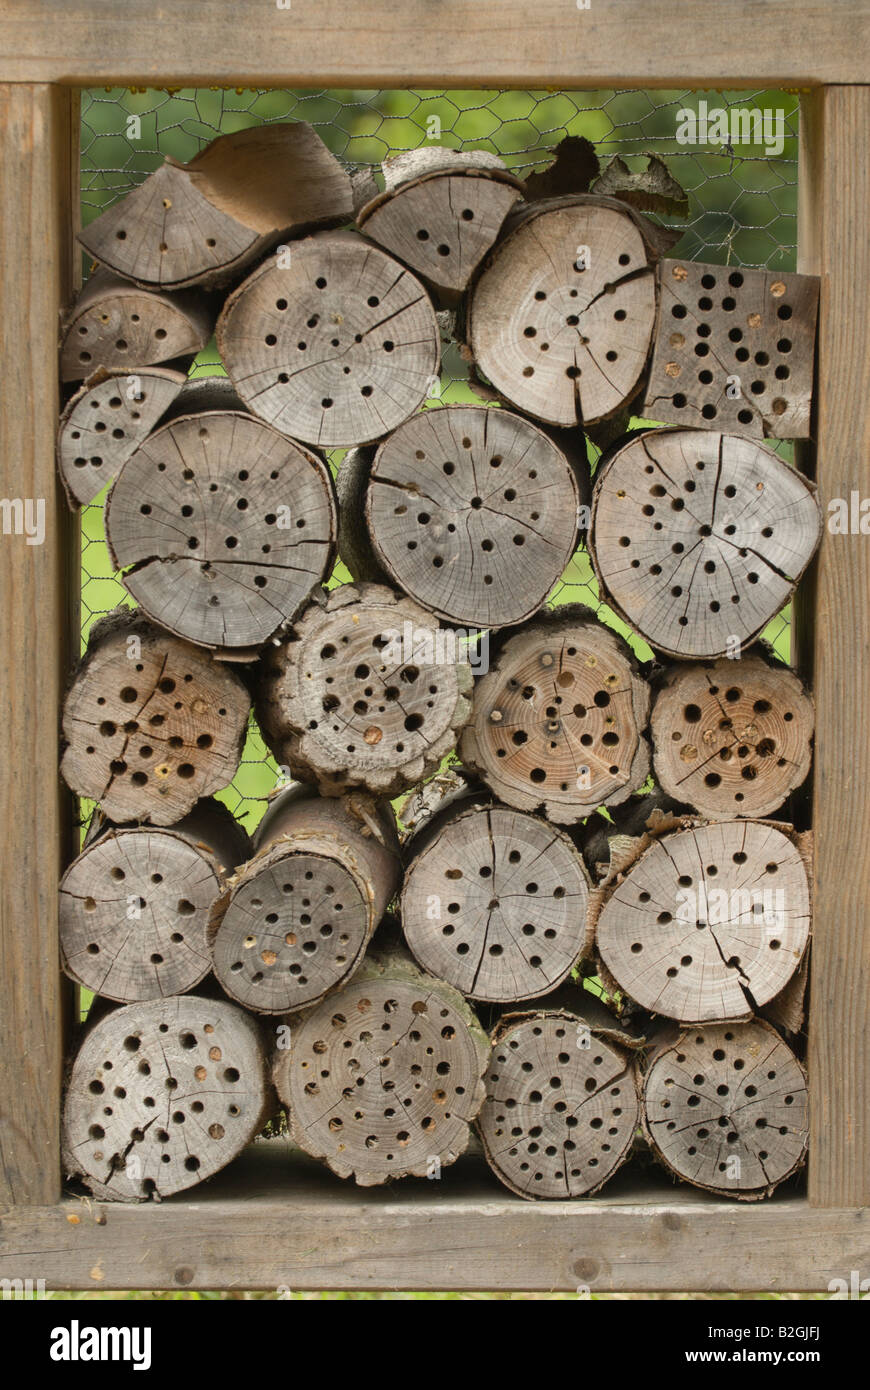 Bruthilfe für solitäre Insekten Bienen Wespen honey be cootie honigbiene apis breeder incubator brutkasten Stock Photo